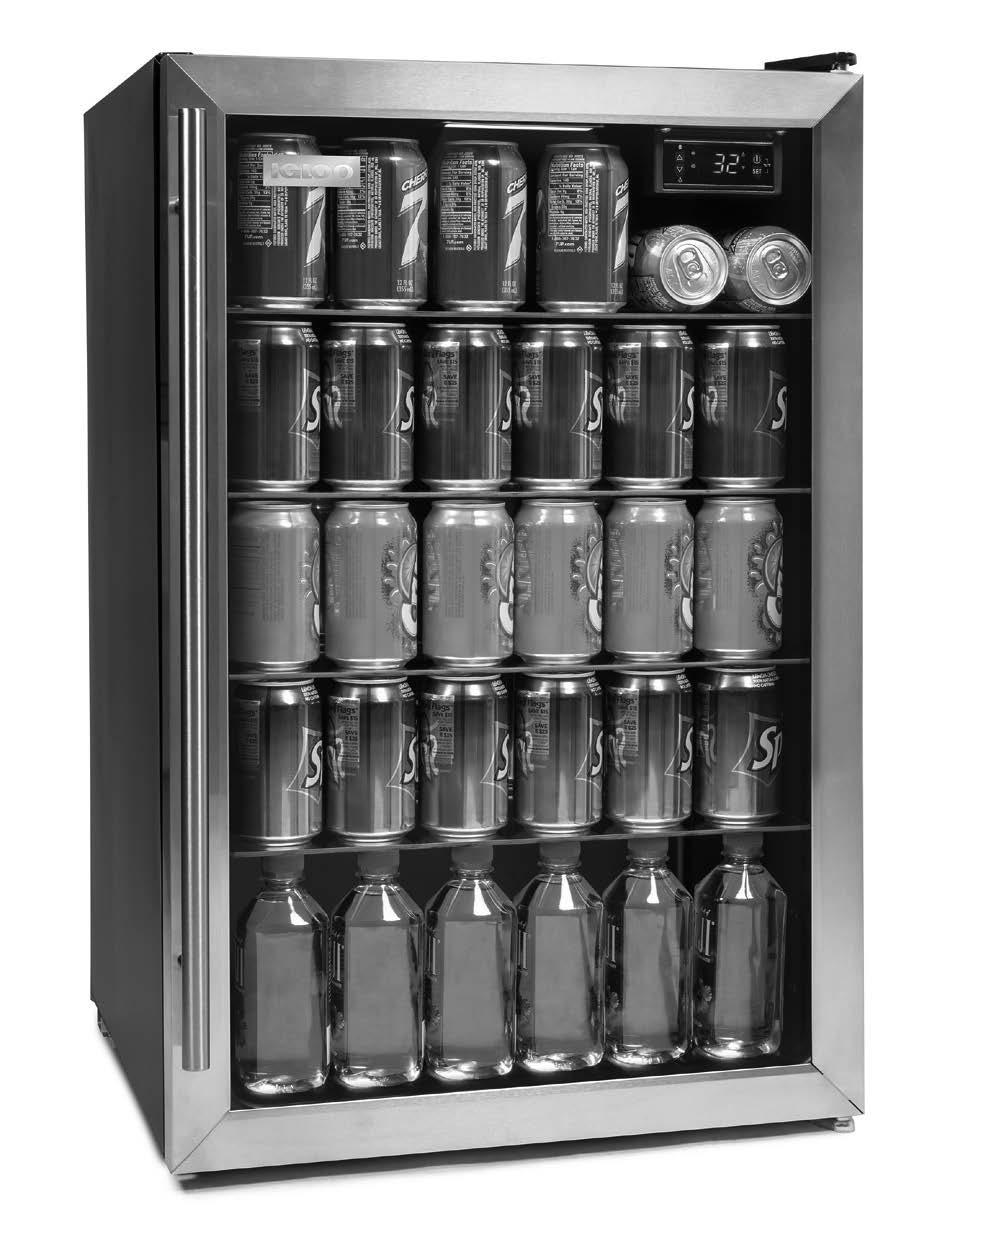 IBC41SS 180-Can Stainless Steel Beverage Cooler Enfriador de bebidas de acero inoxidable para 180 latas